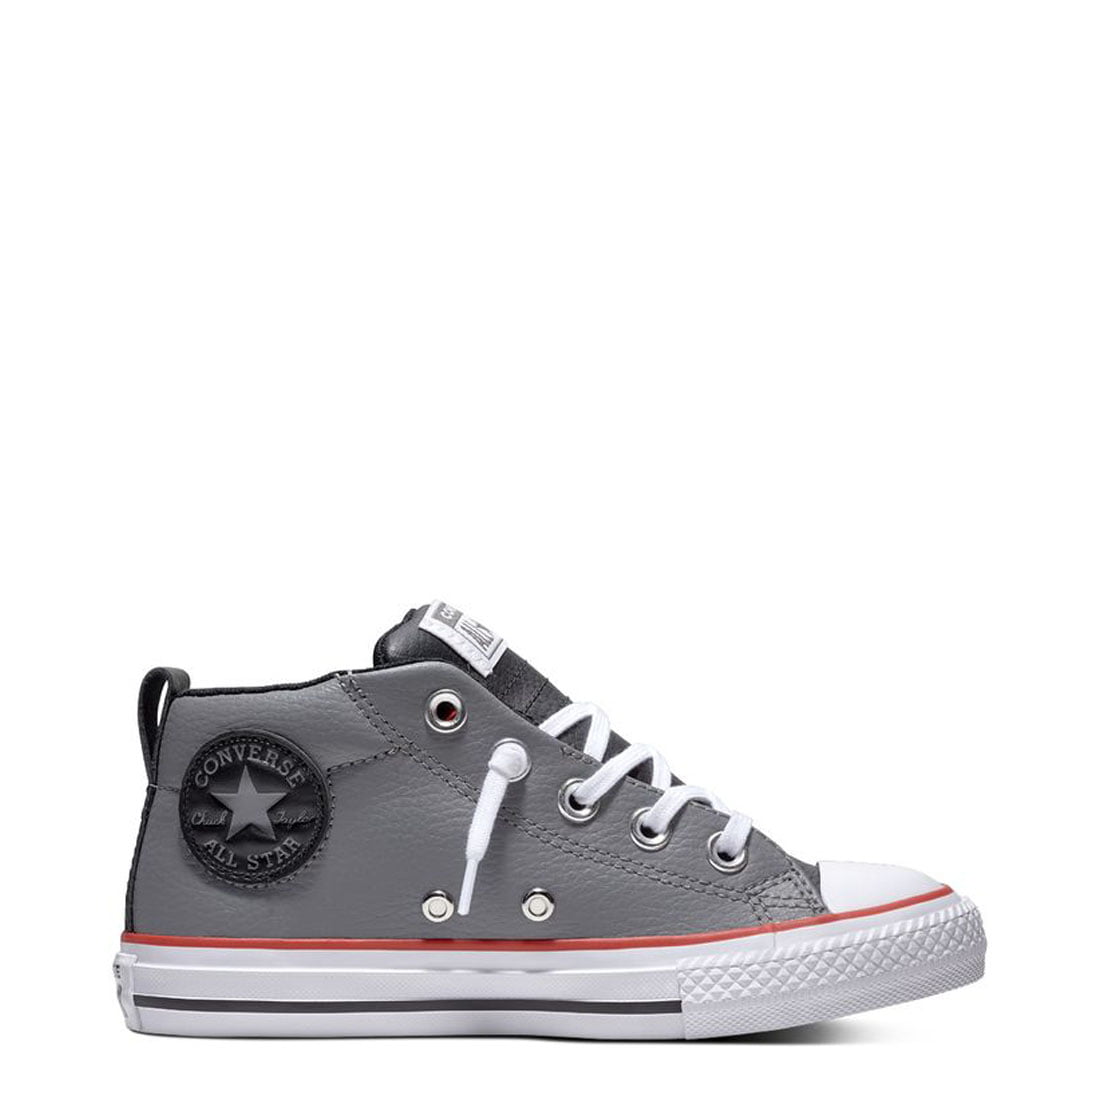 Converse Chuck Taylor Star Street Mid Leather Boys/Child shoe size 4 Casual 661888C Mason/Black/White -